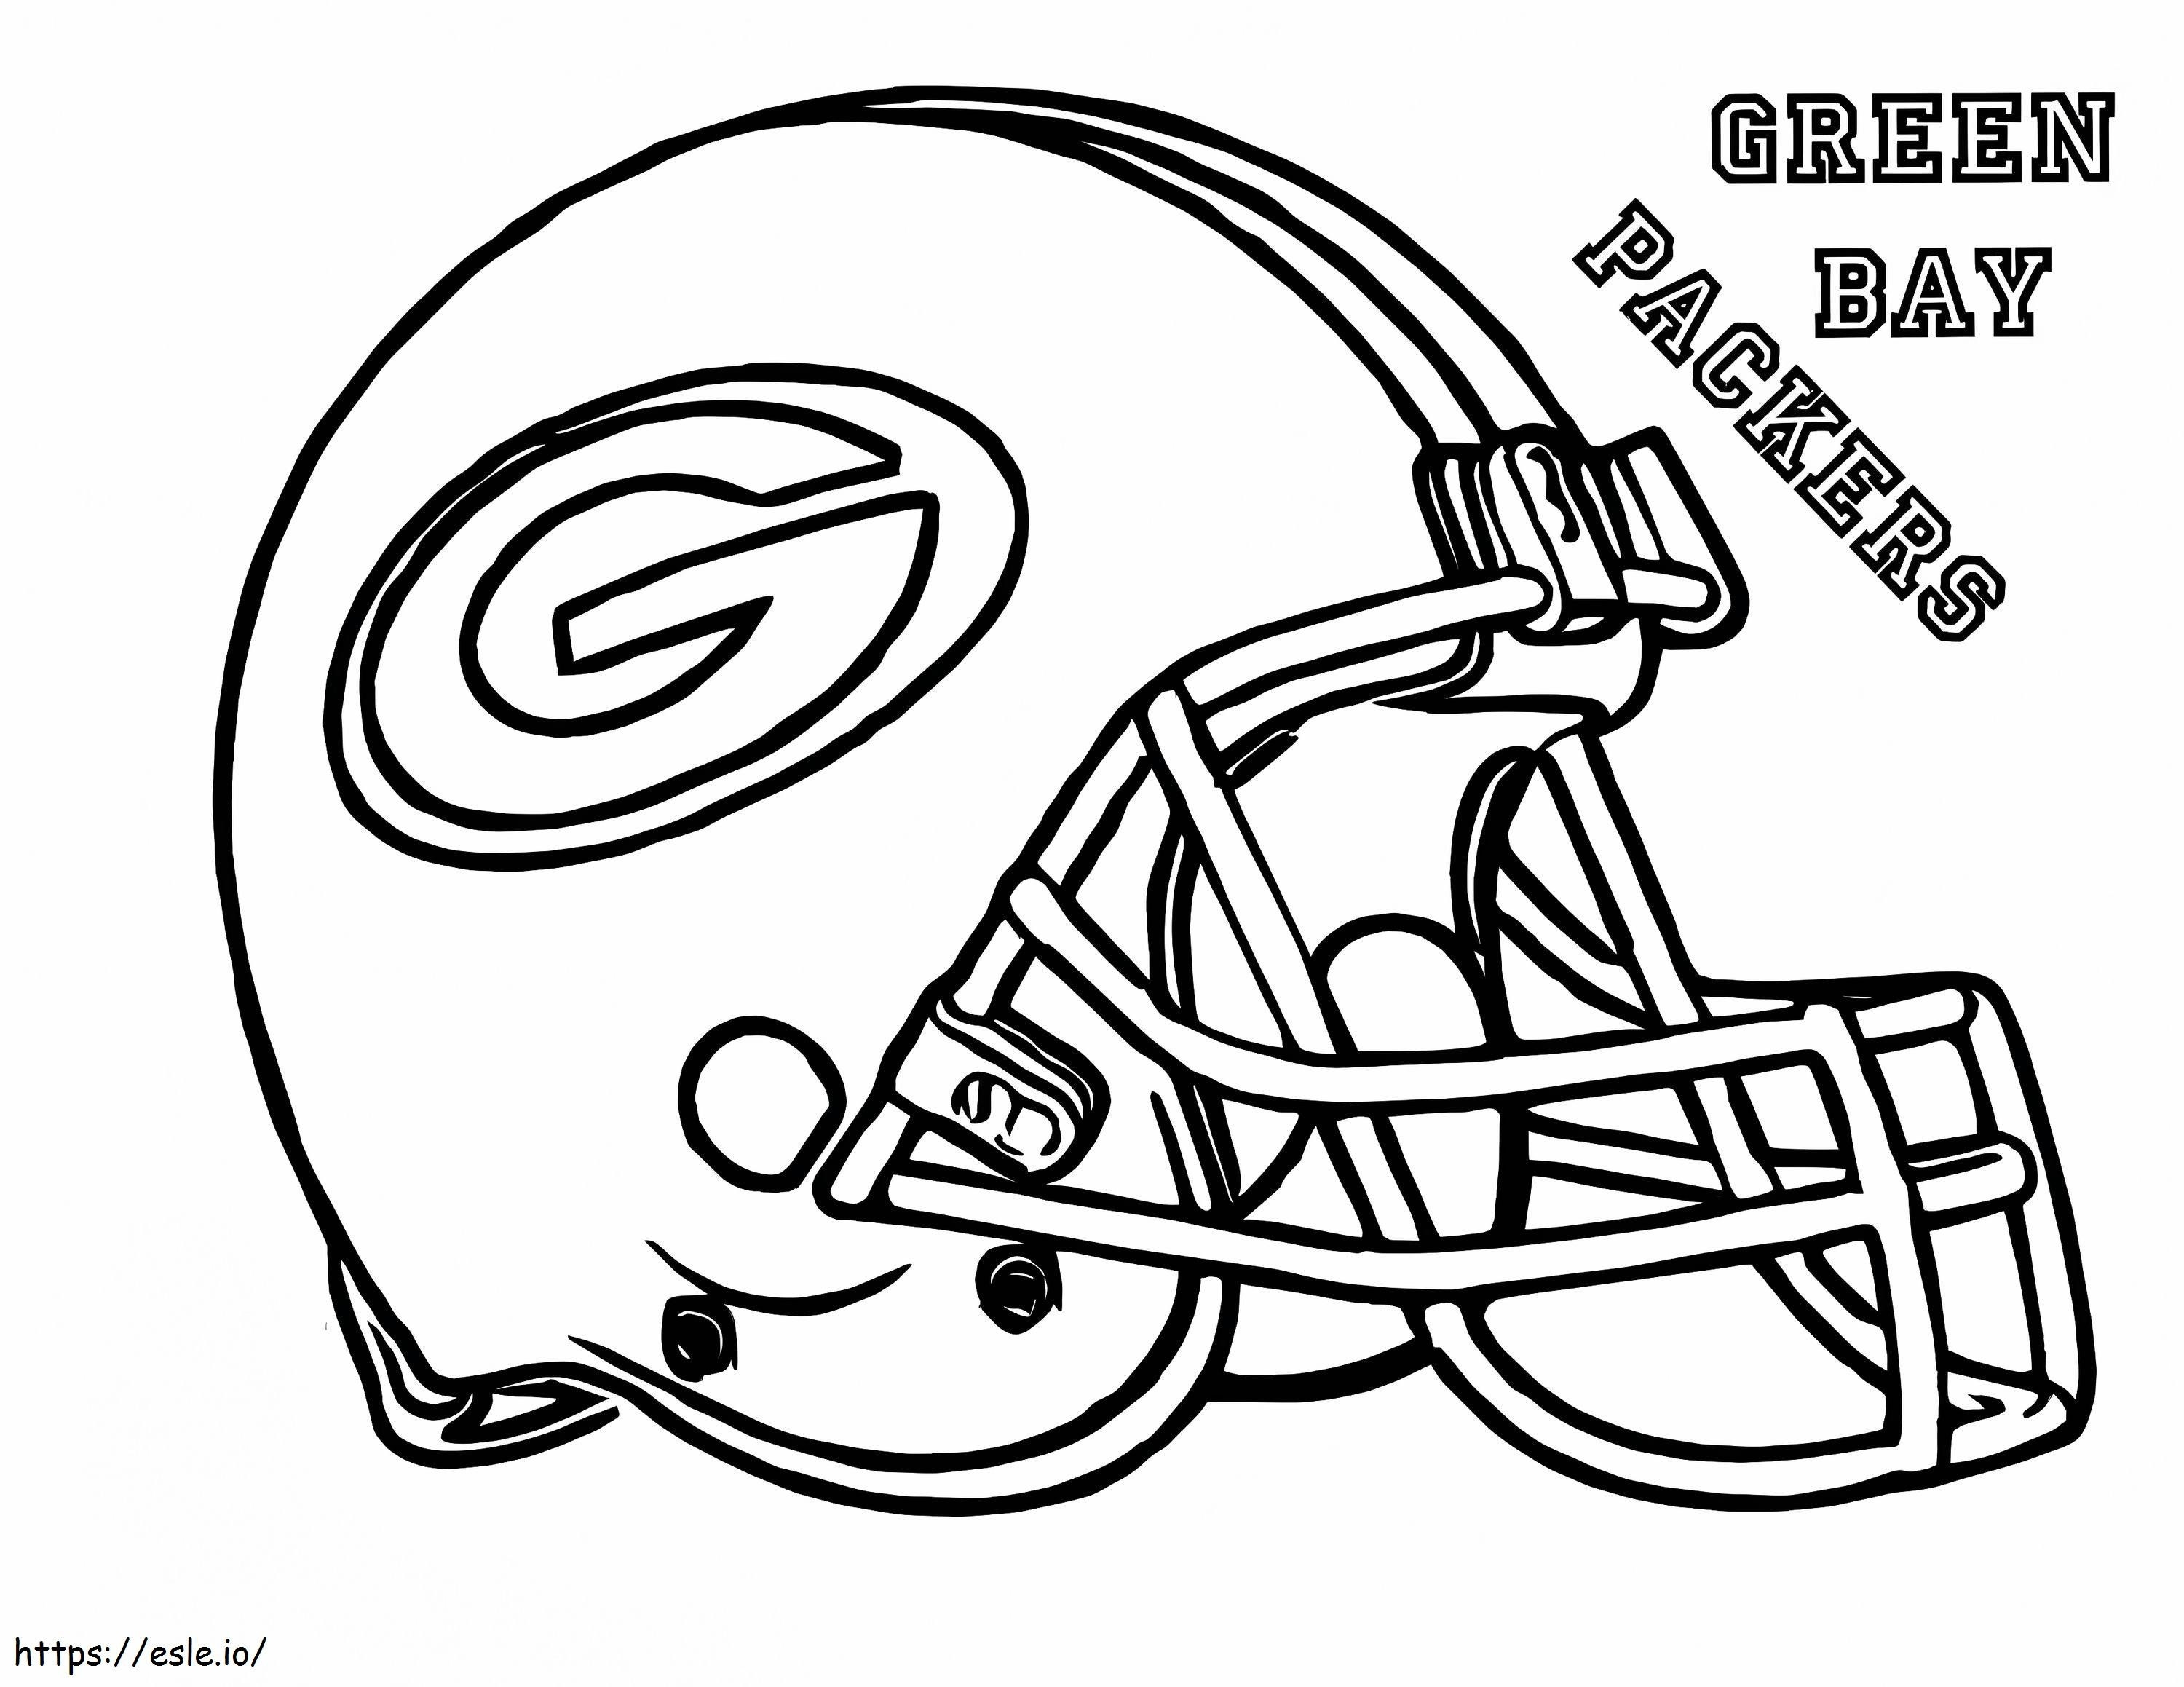 Green Bay Packers de colorat